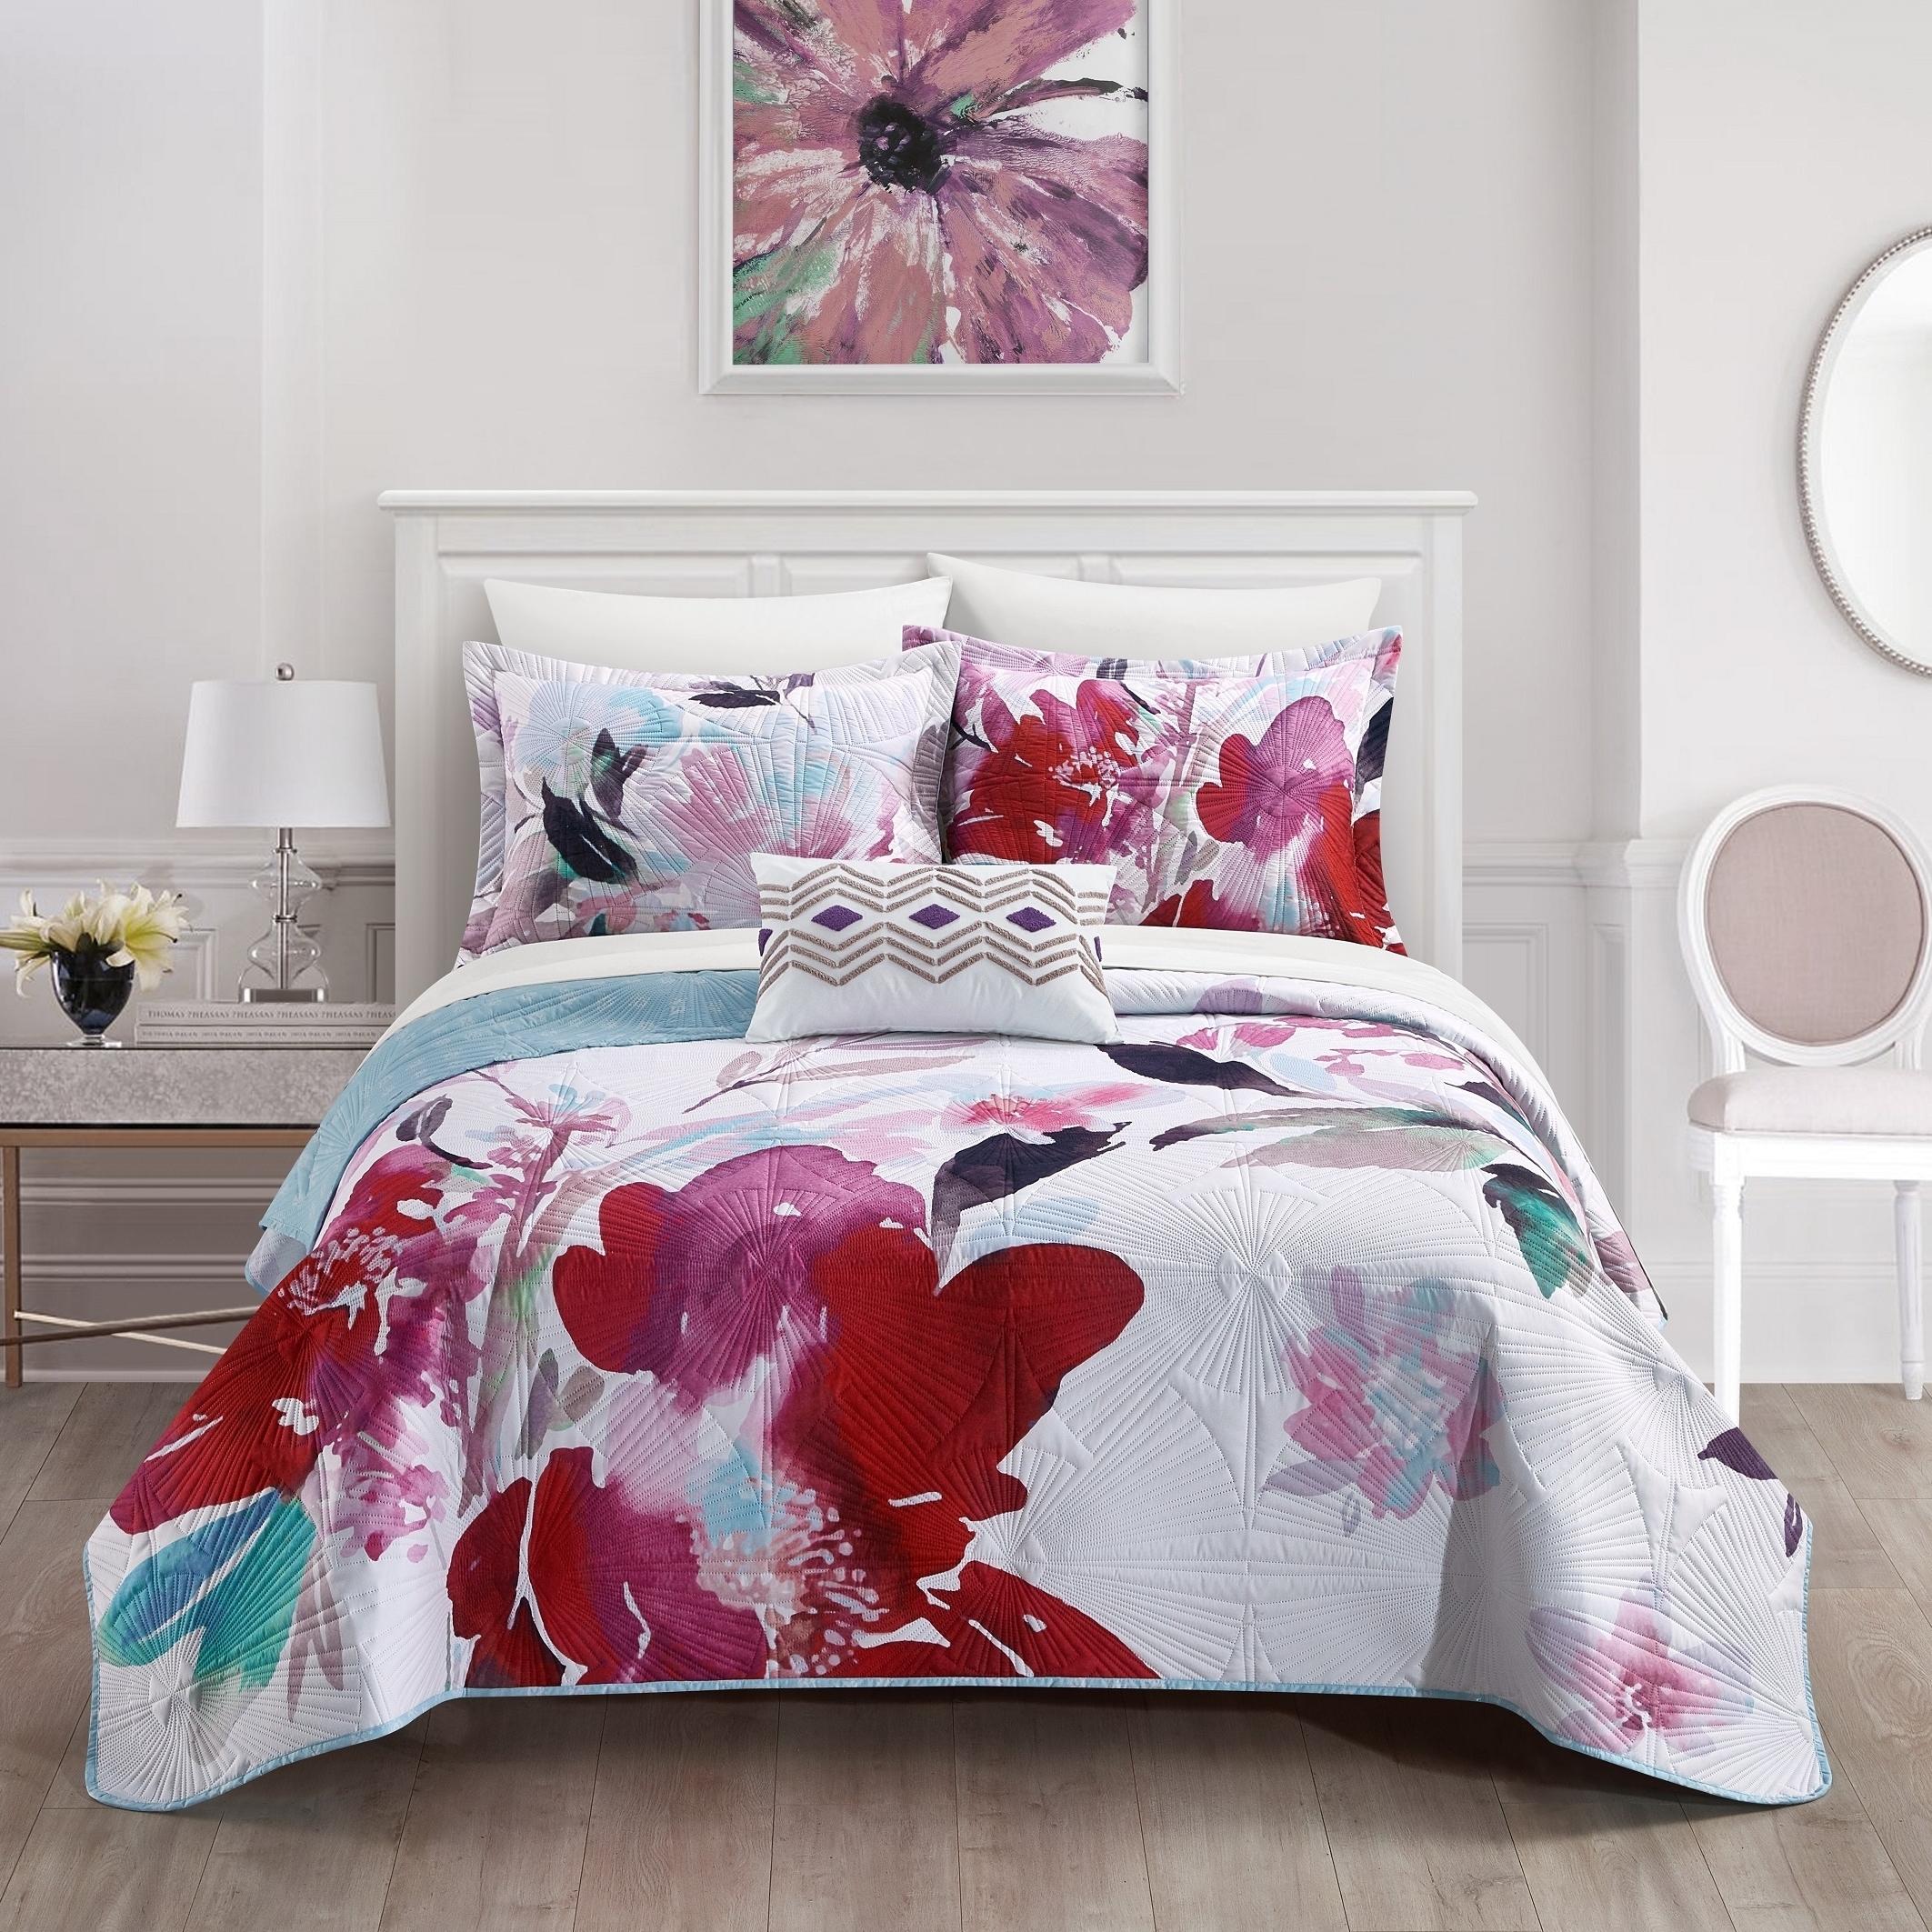 Ateus Palace 3 Or 4Piece Reversible Quilt Set Floral Watercolor Design Bedding - Red Hatsie, Queen (4 Piece)